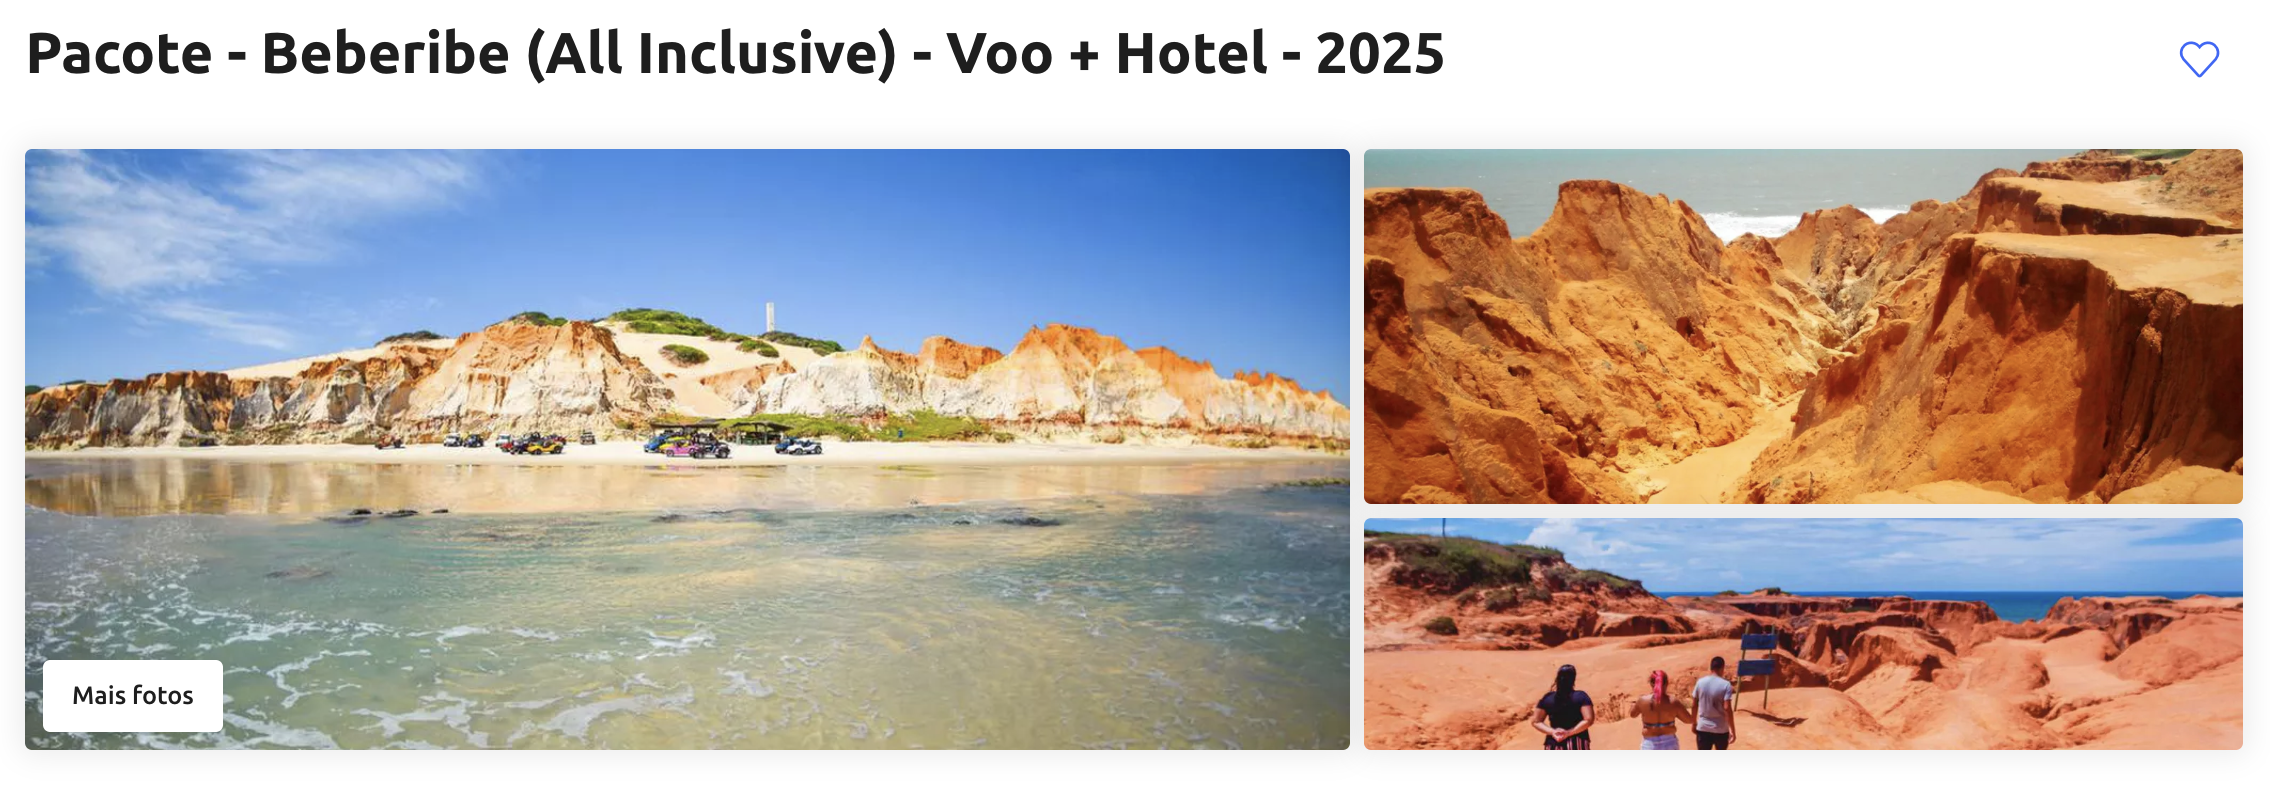 Pacote - Beberibe (All Inclusive) - Voo + Hotel - 2025